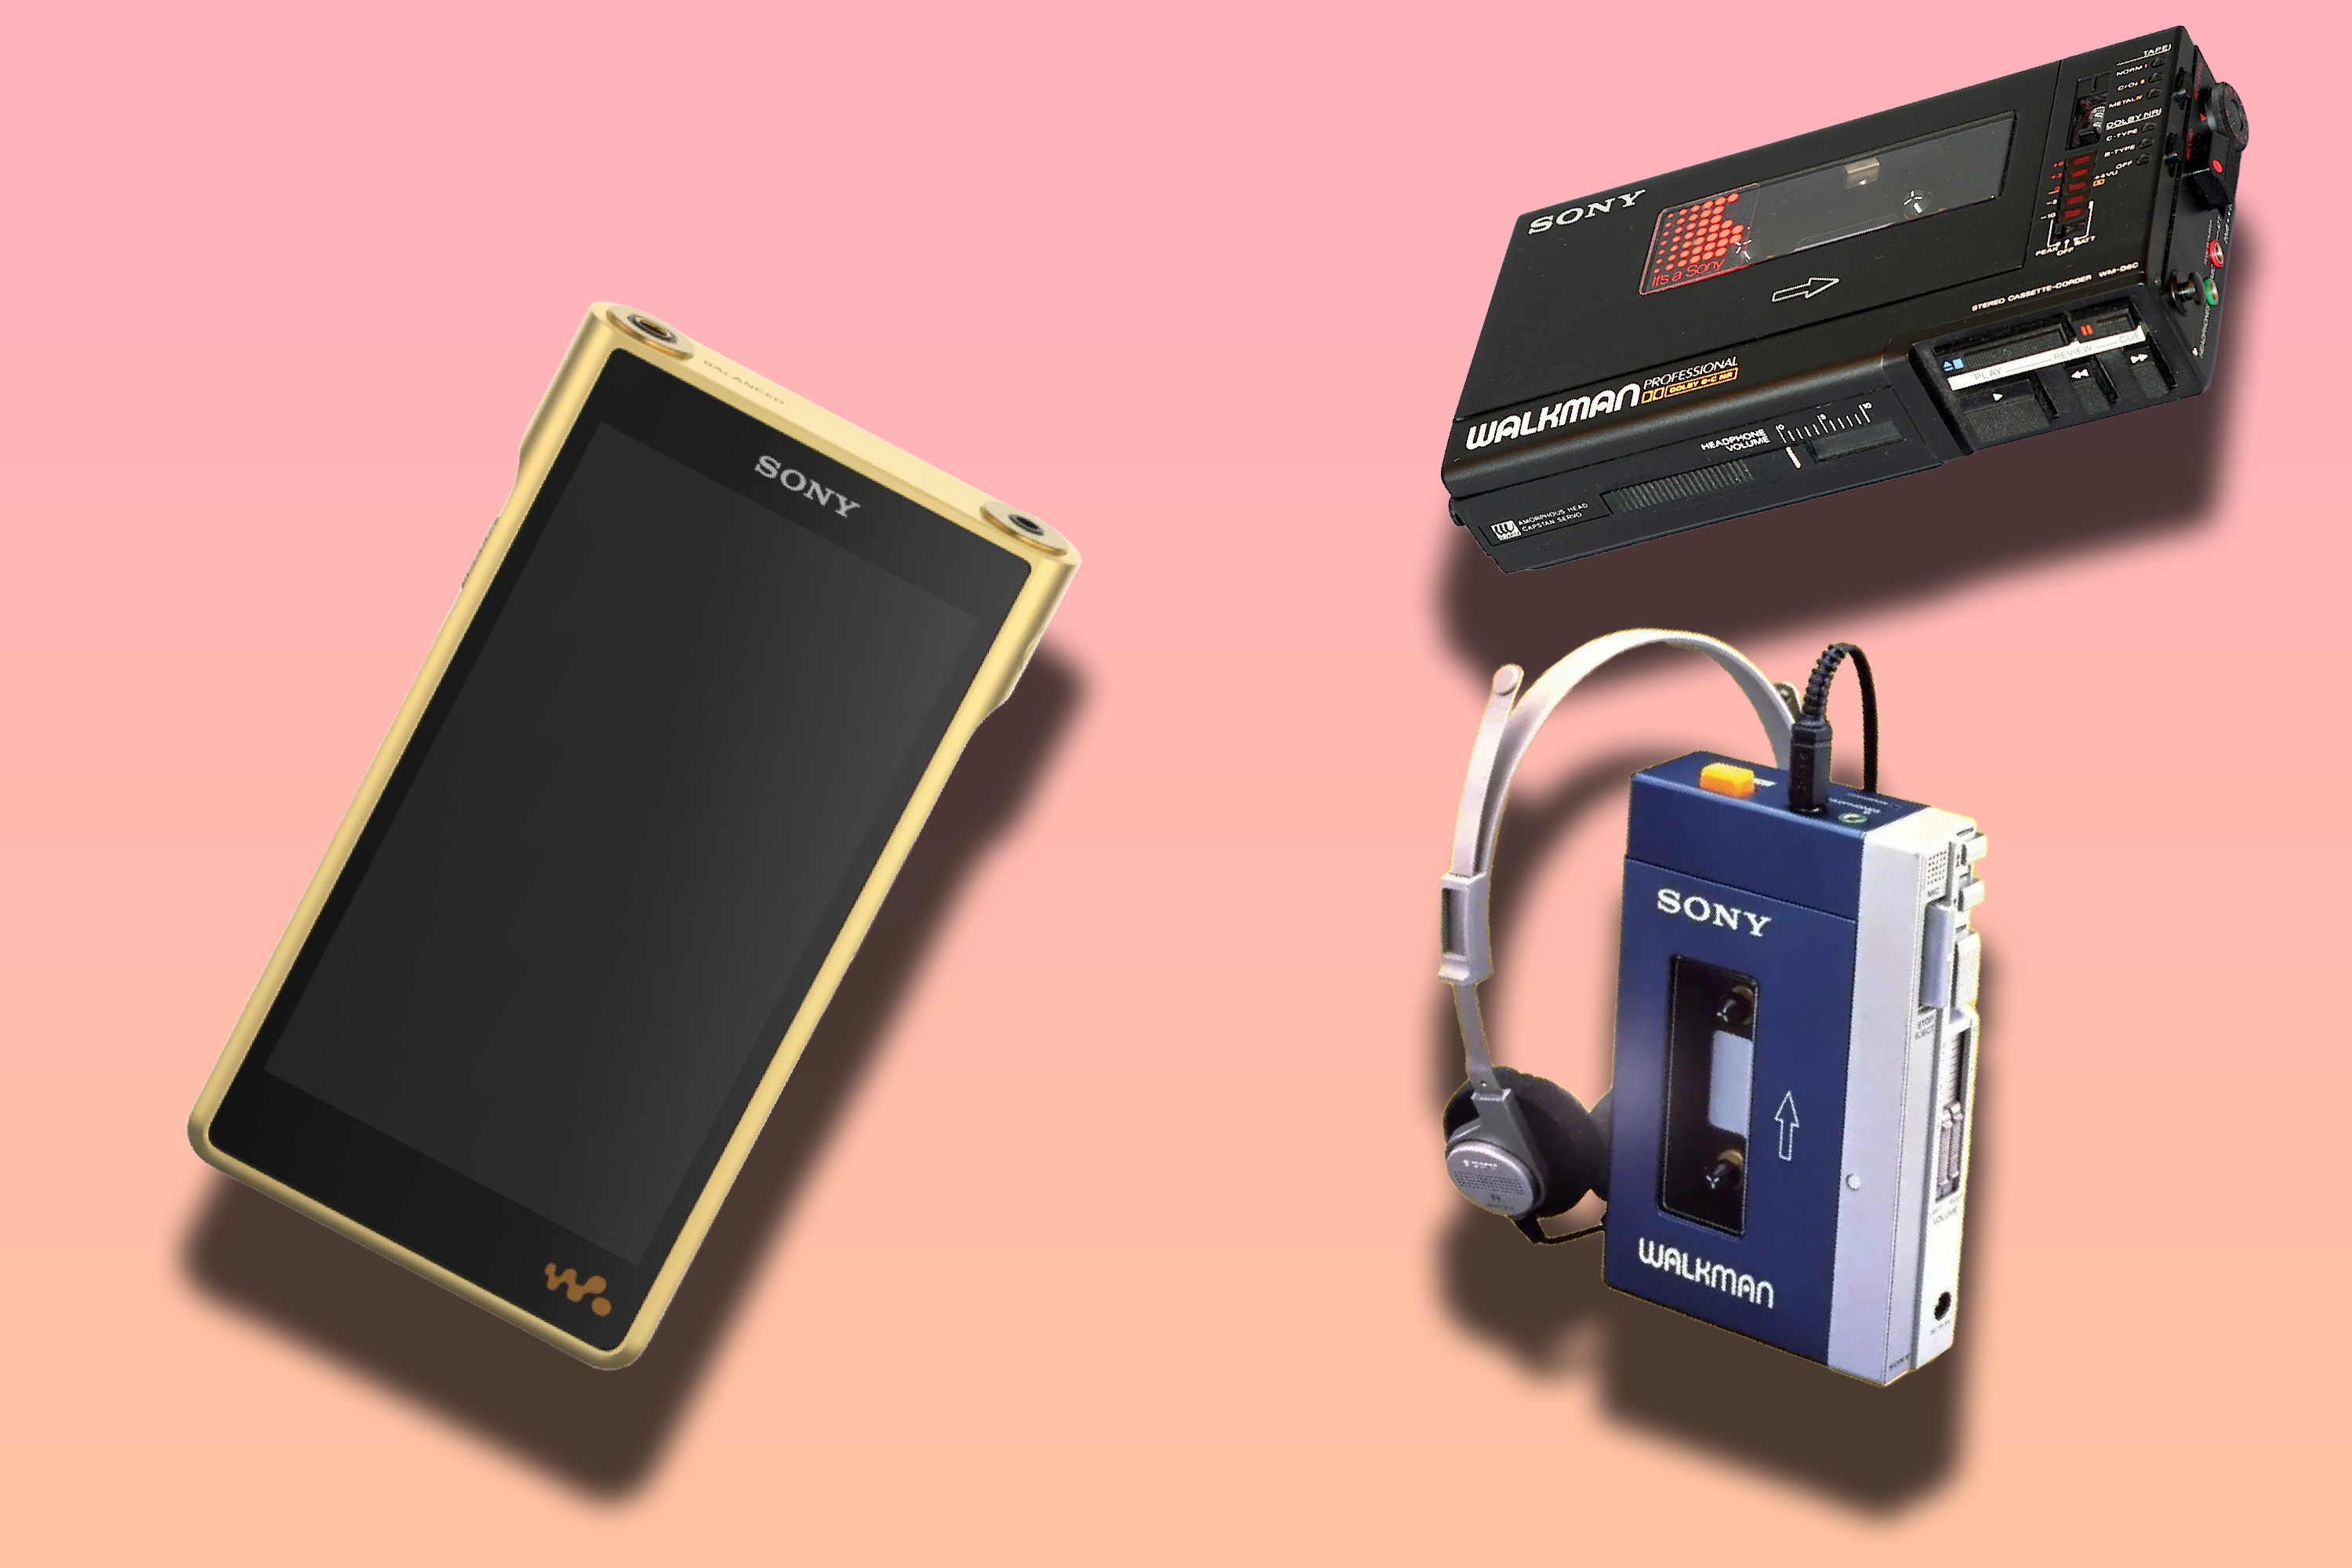 Sony WM-10 Walkman Portable Cassette Player (1983)